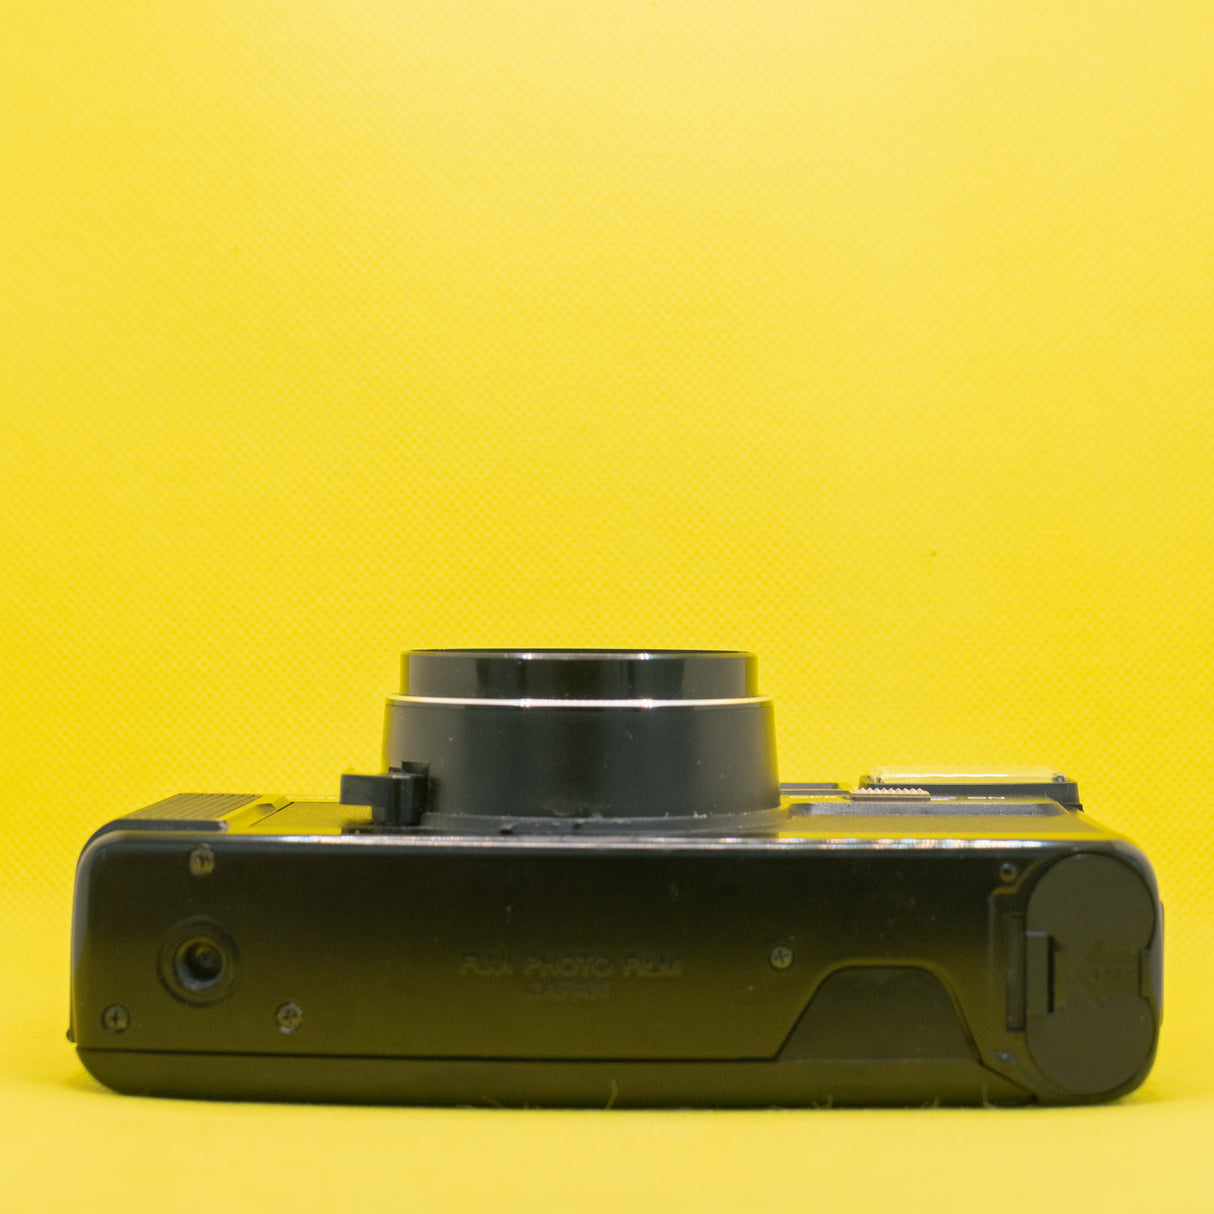 Fujica Auto 5 F2.8- Rangefinder 35mm Film Camera